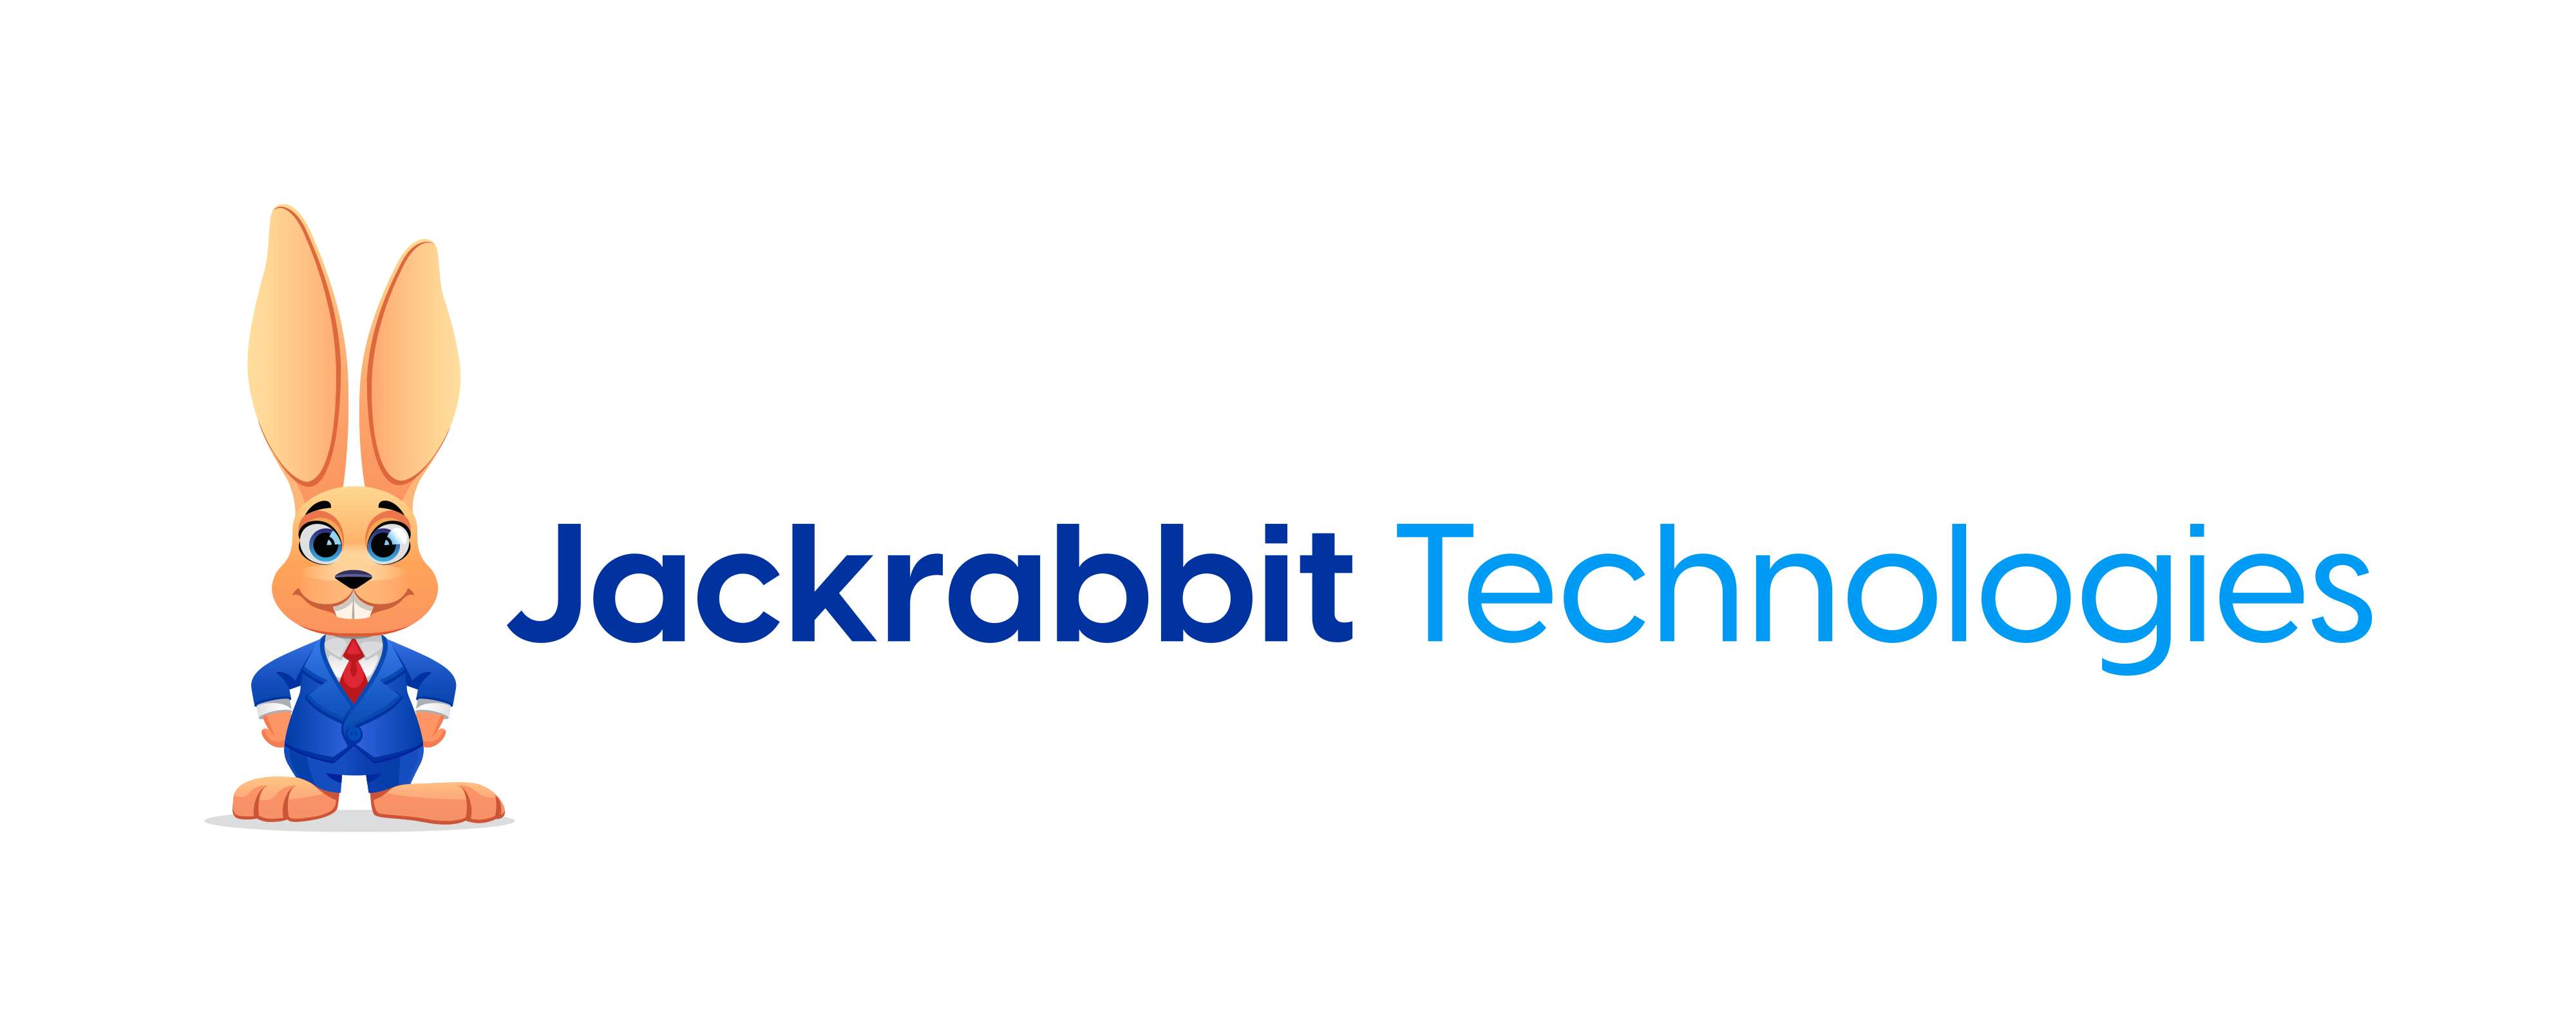 Jackrabbit Technologies Logo 